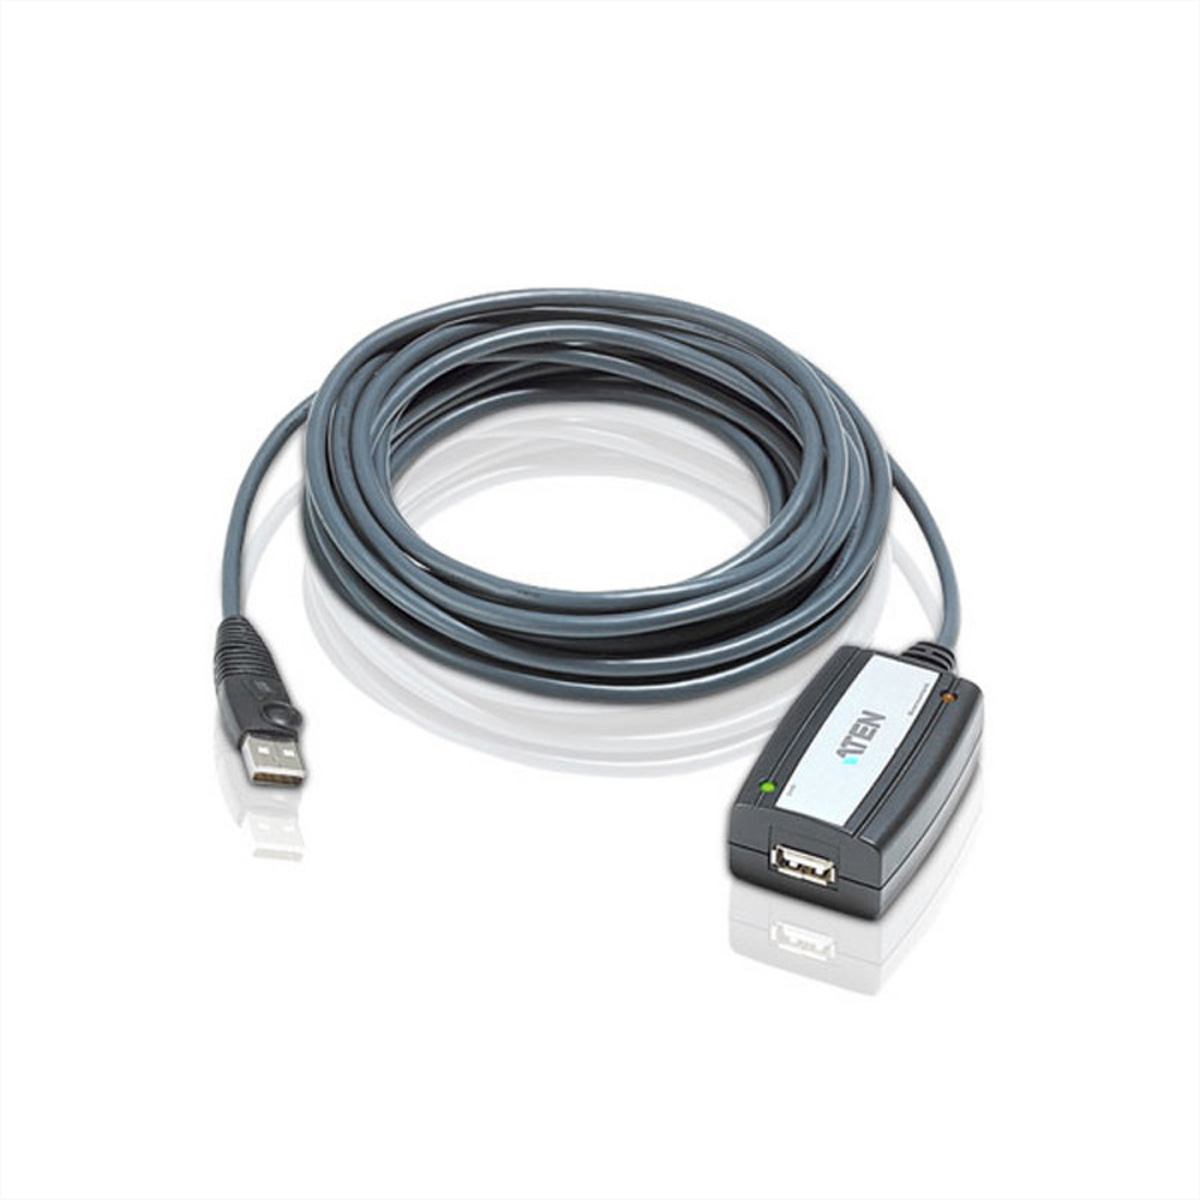 ATEN UE250 USB 2.0 Extender Cable, schwarz, 5 m